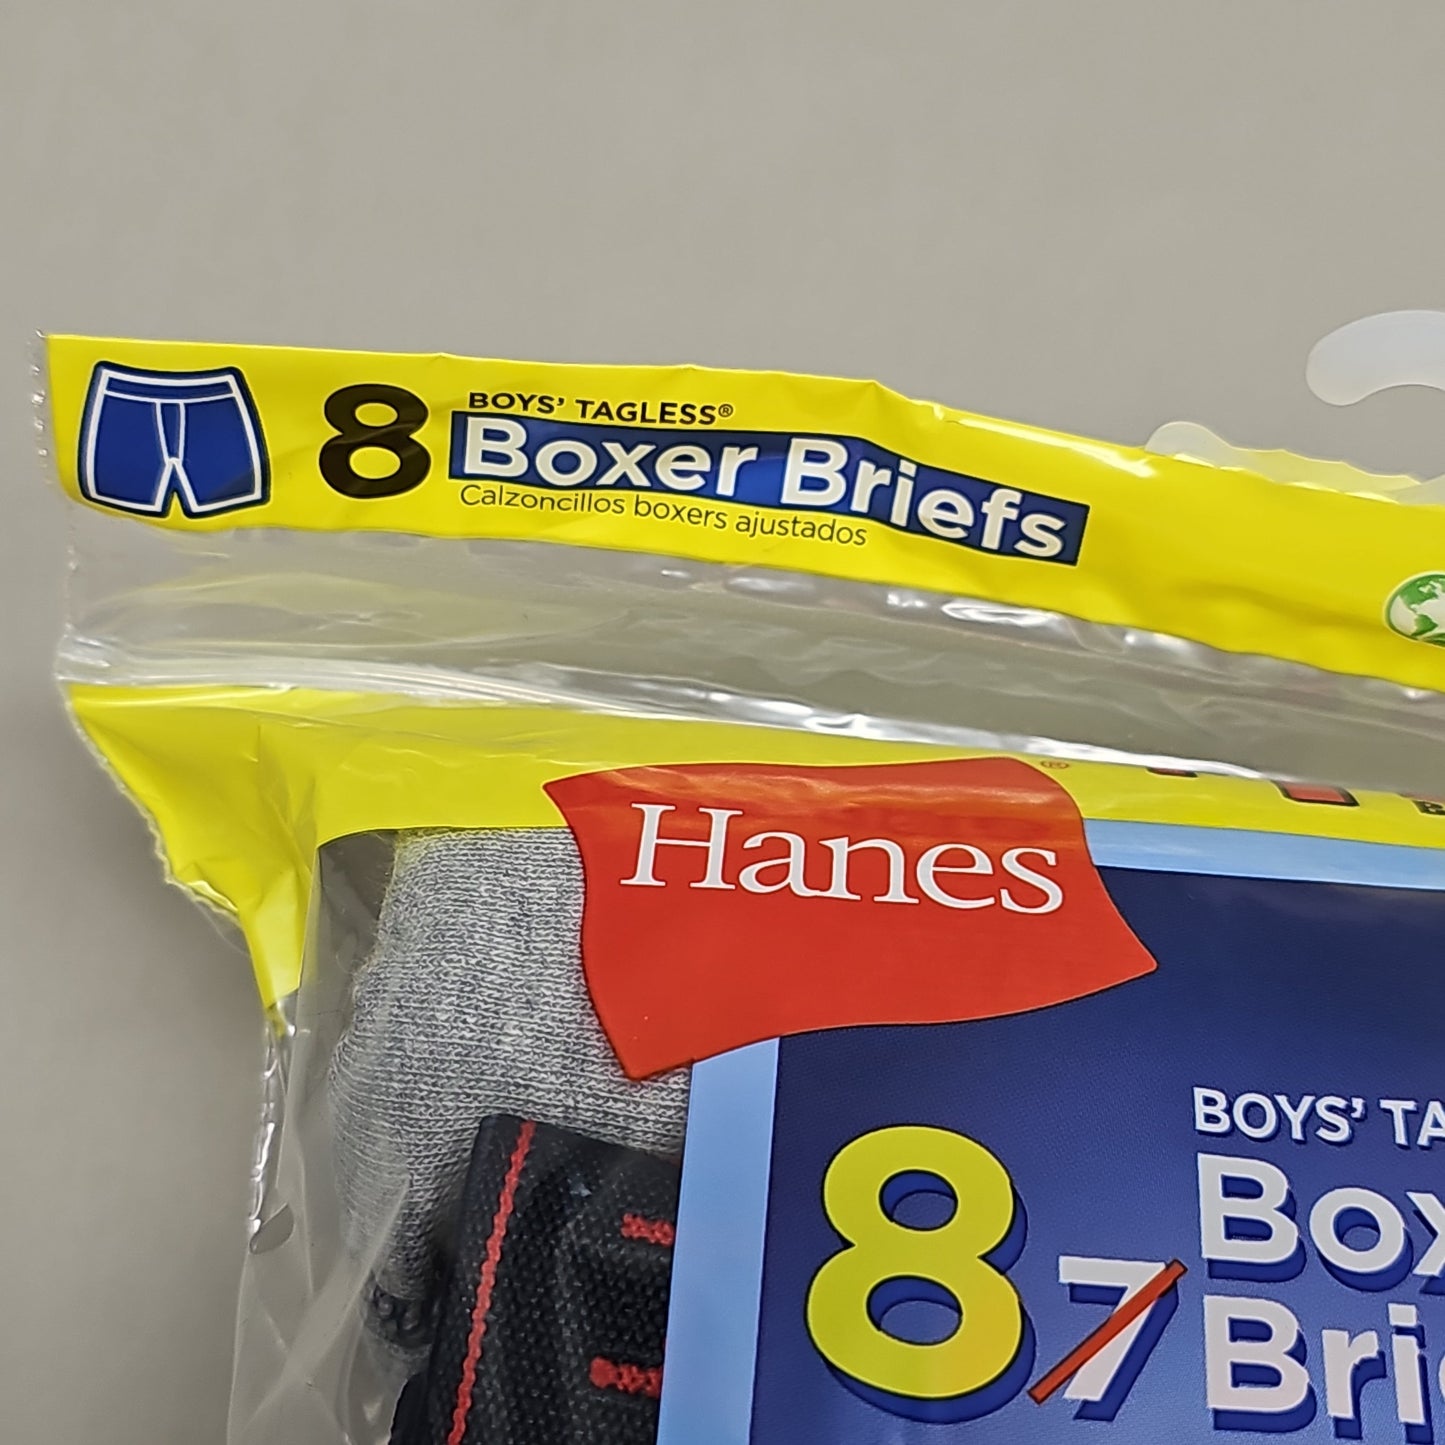 HANES Boxer Briefs 16-Pack Boy's Tagless Size S 6/8 B74SR8 (New)